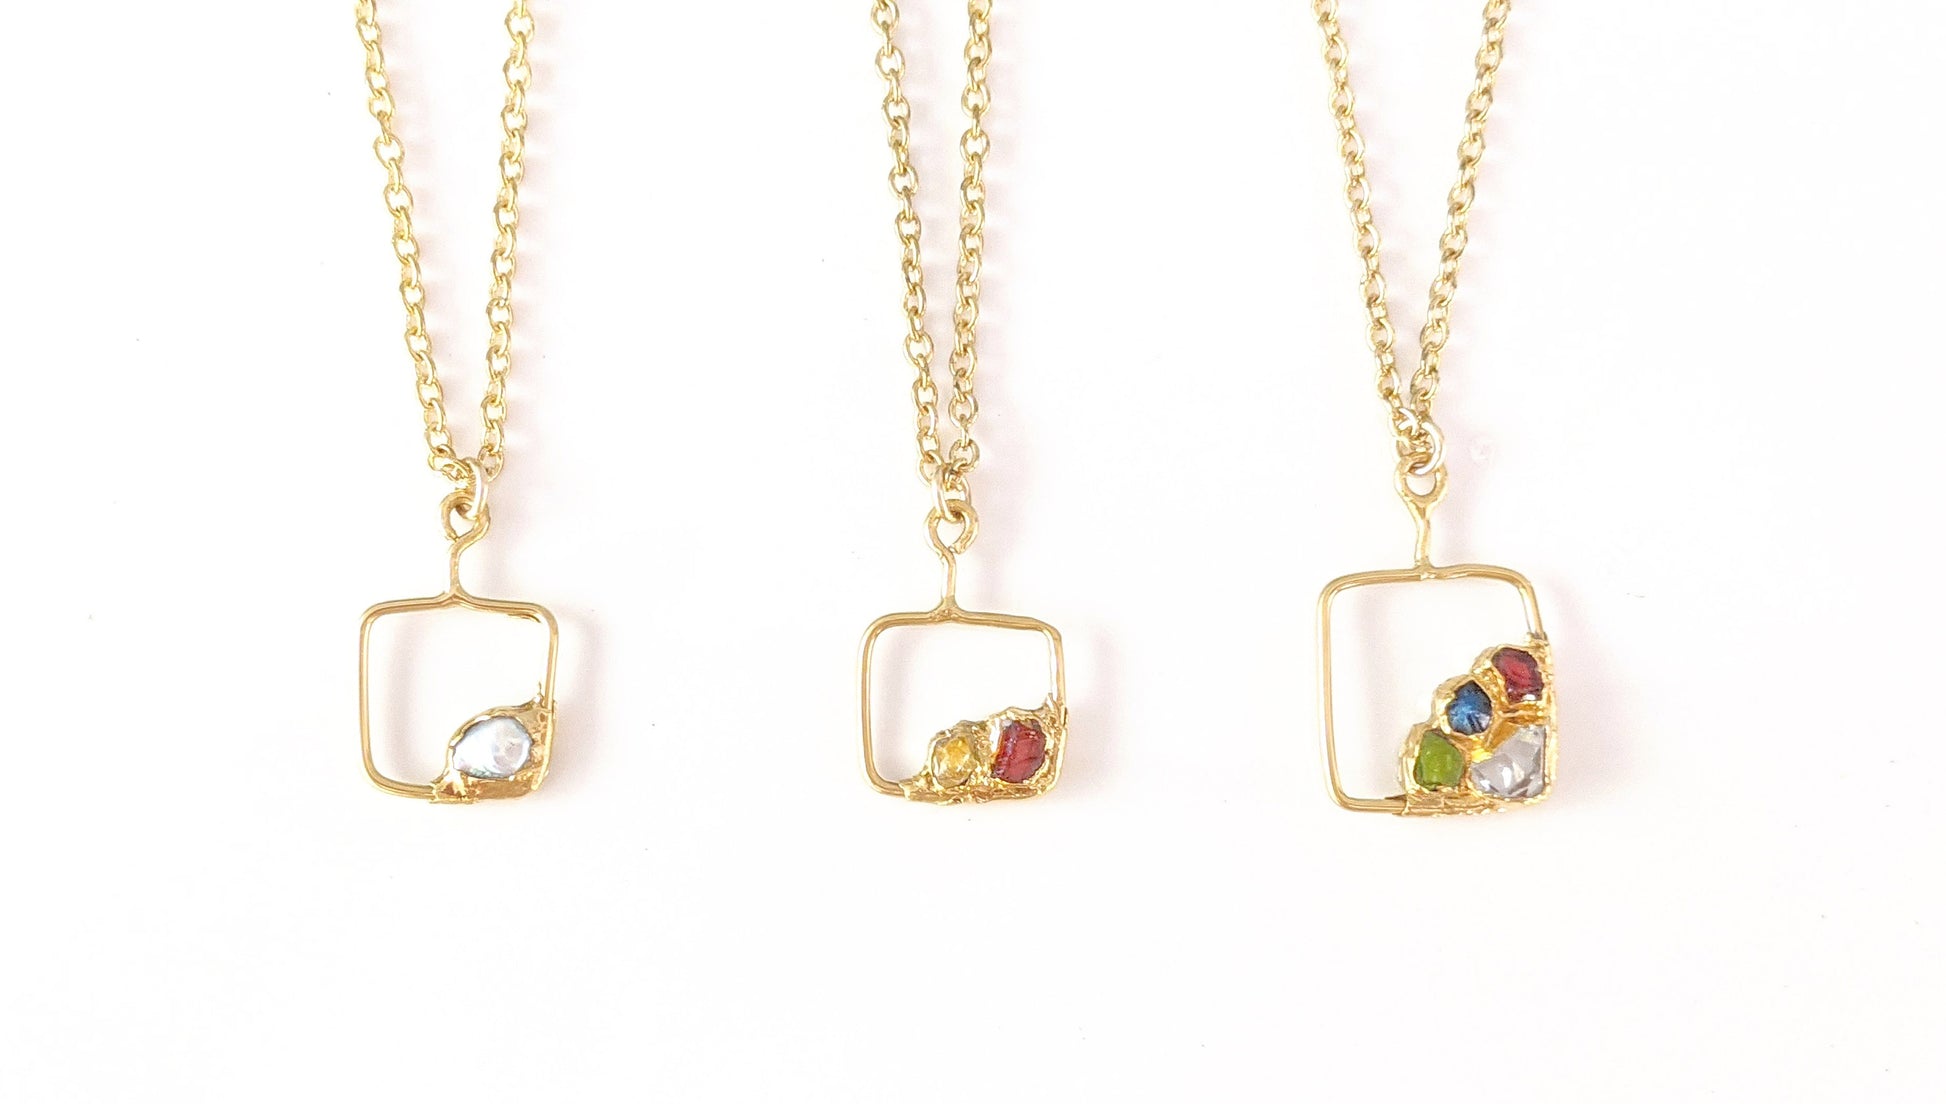 Unique Personalized Family Birthstone necklace in unique 18k Gold setting